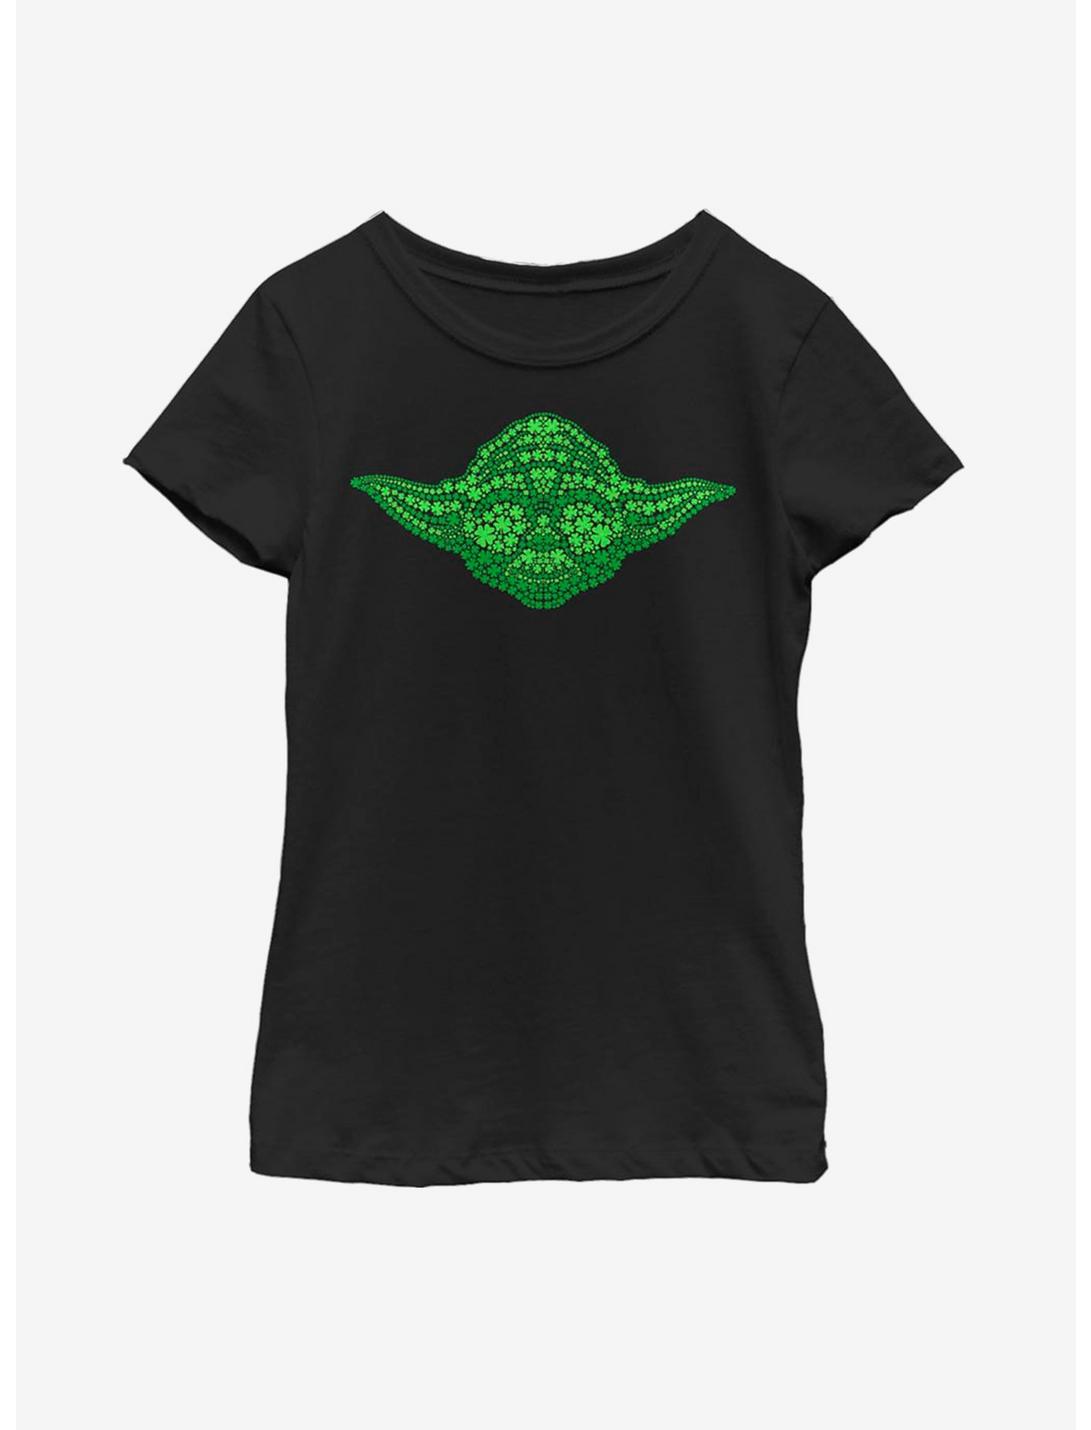 Star Wars Yoda Clovers Youth Girls T-Shirt, BLACK, hi-res